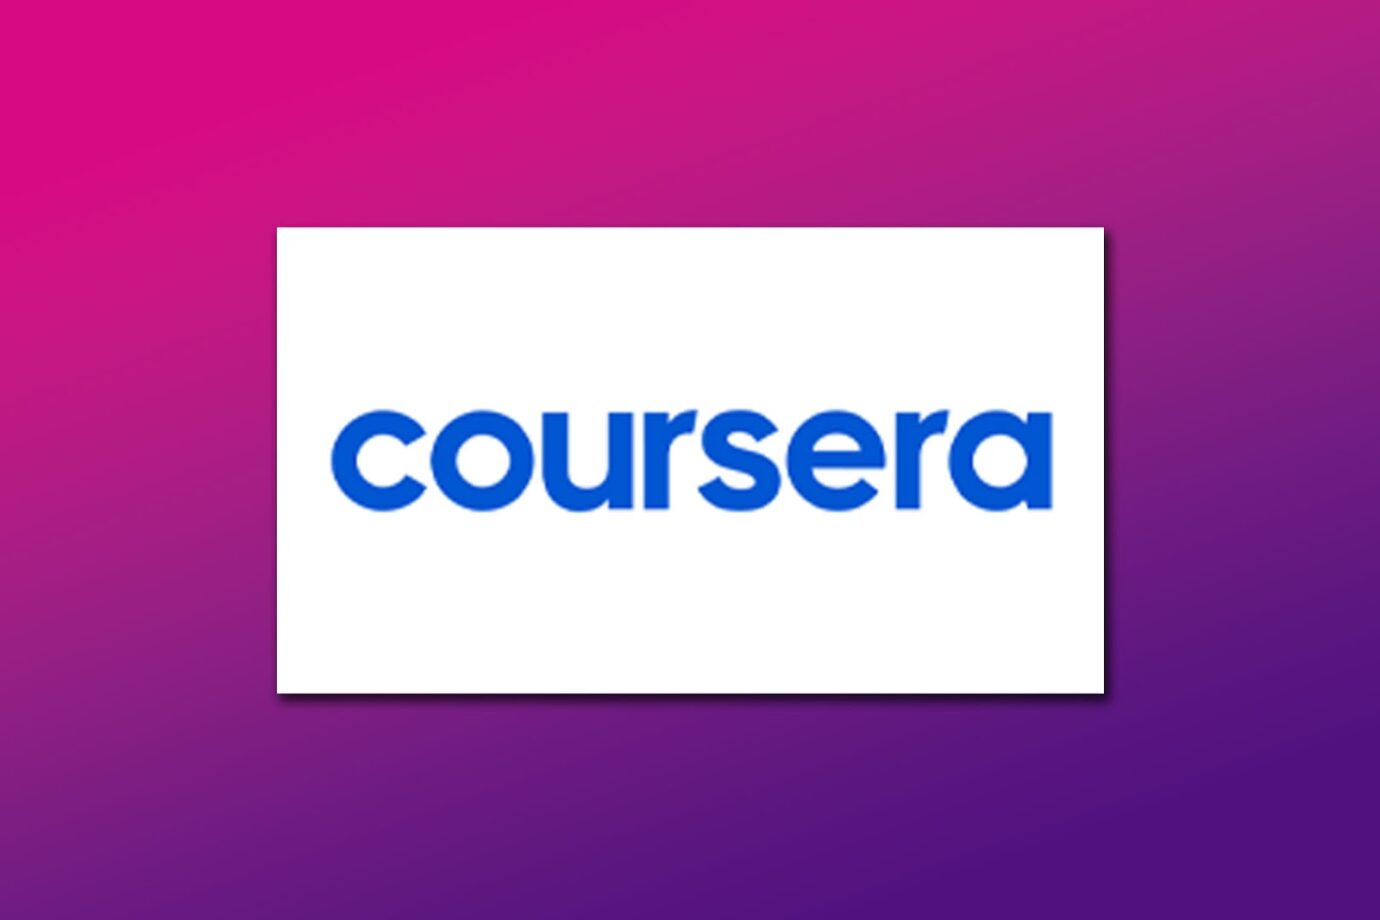 Coursera Company Using Slack